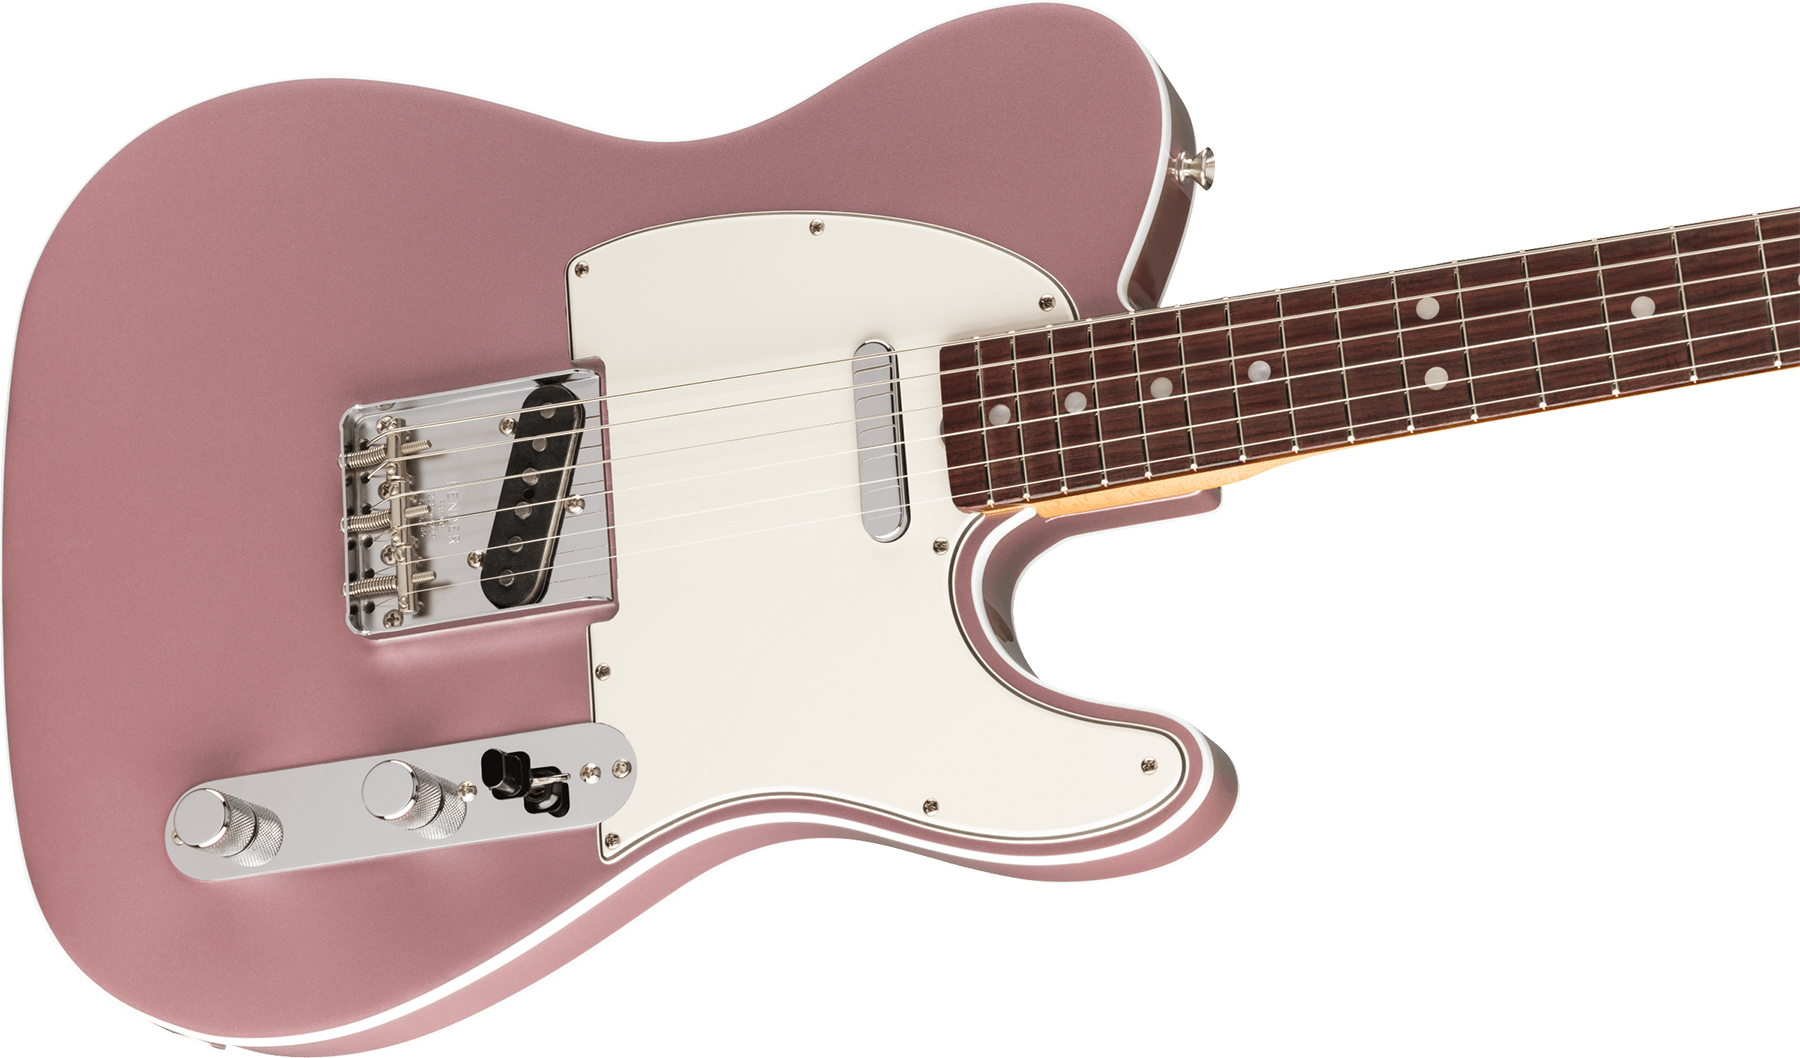 Fender Tele '60s American Original Usa Ss Rw - Burgundy Mist Metallic - Televorm elektrische gitaar - Variation 2